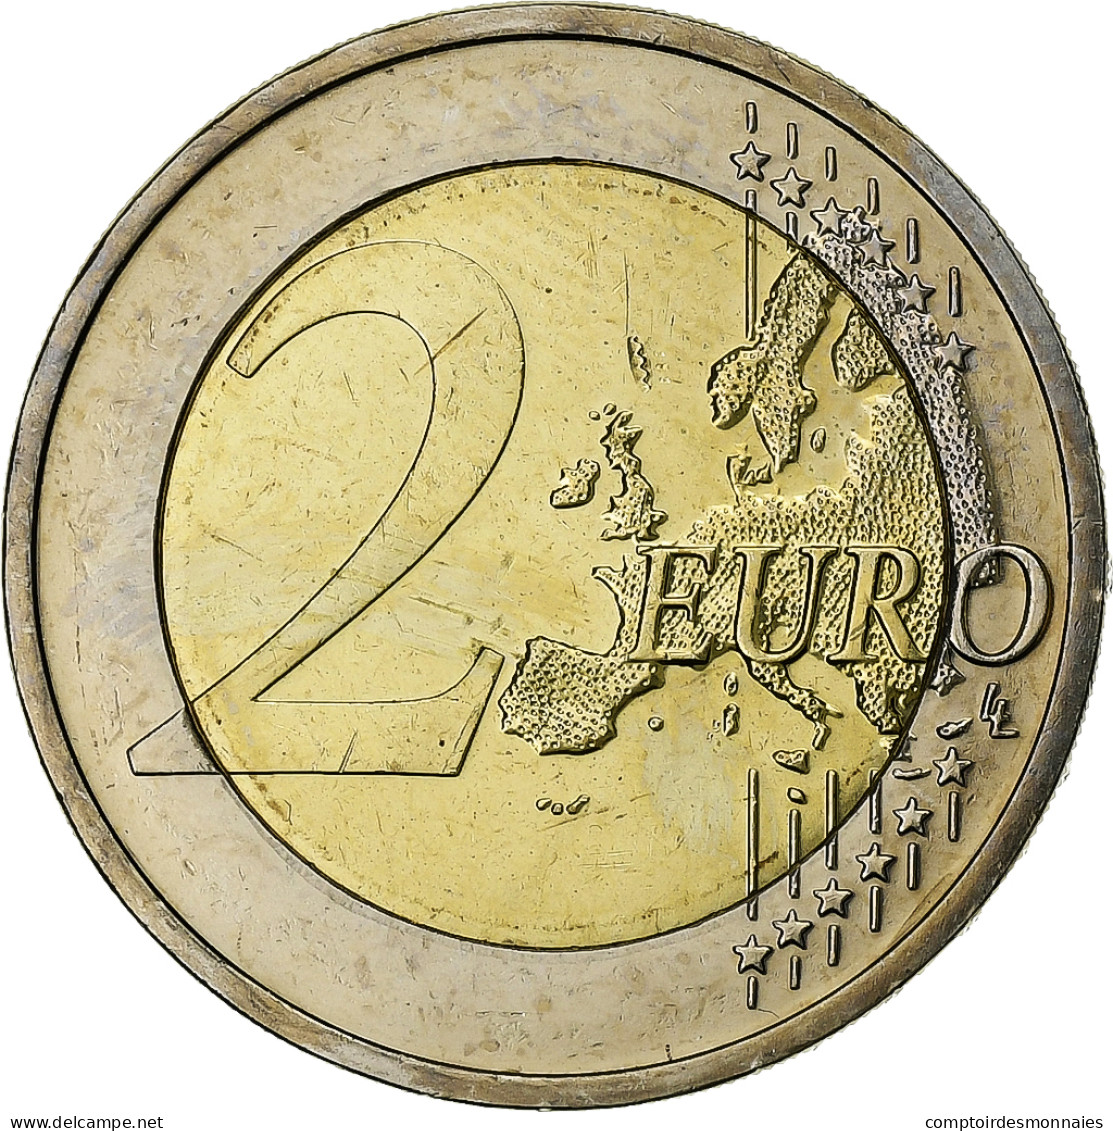 Allemagne, 2 Euro, €uro 2002-2012, 2012, SPL+, Bimétallique - Germania